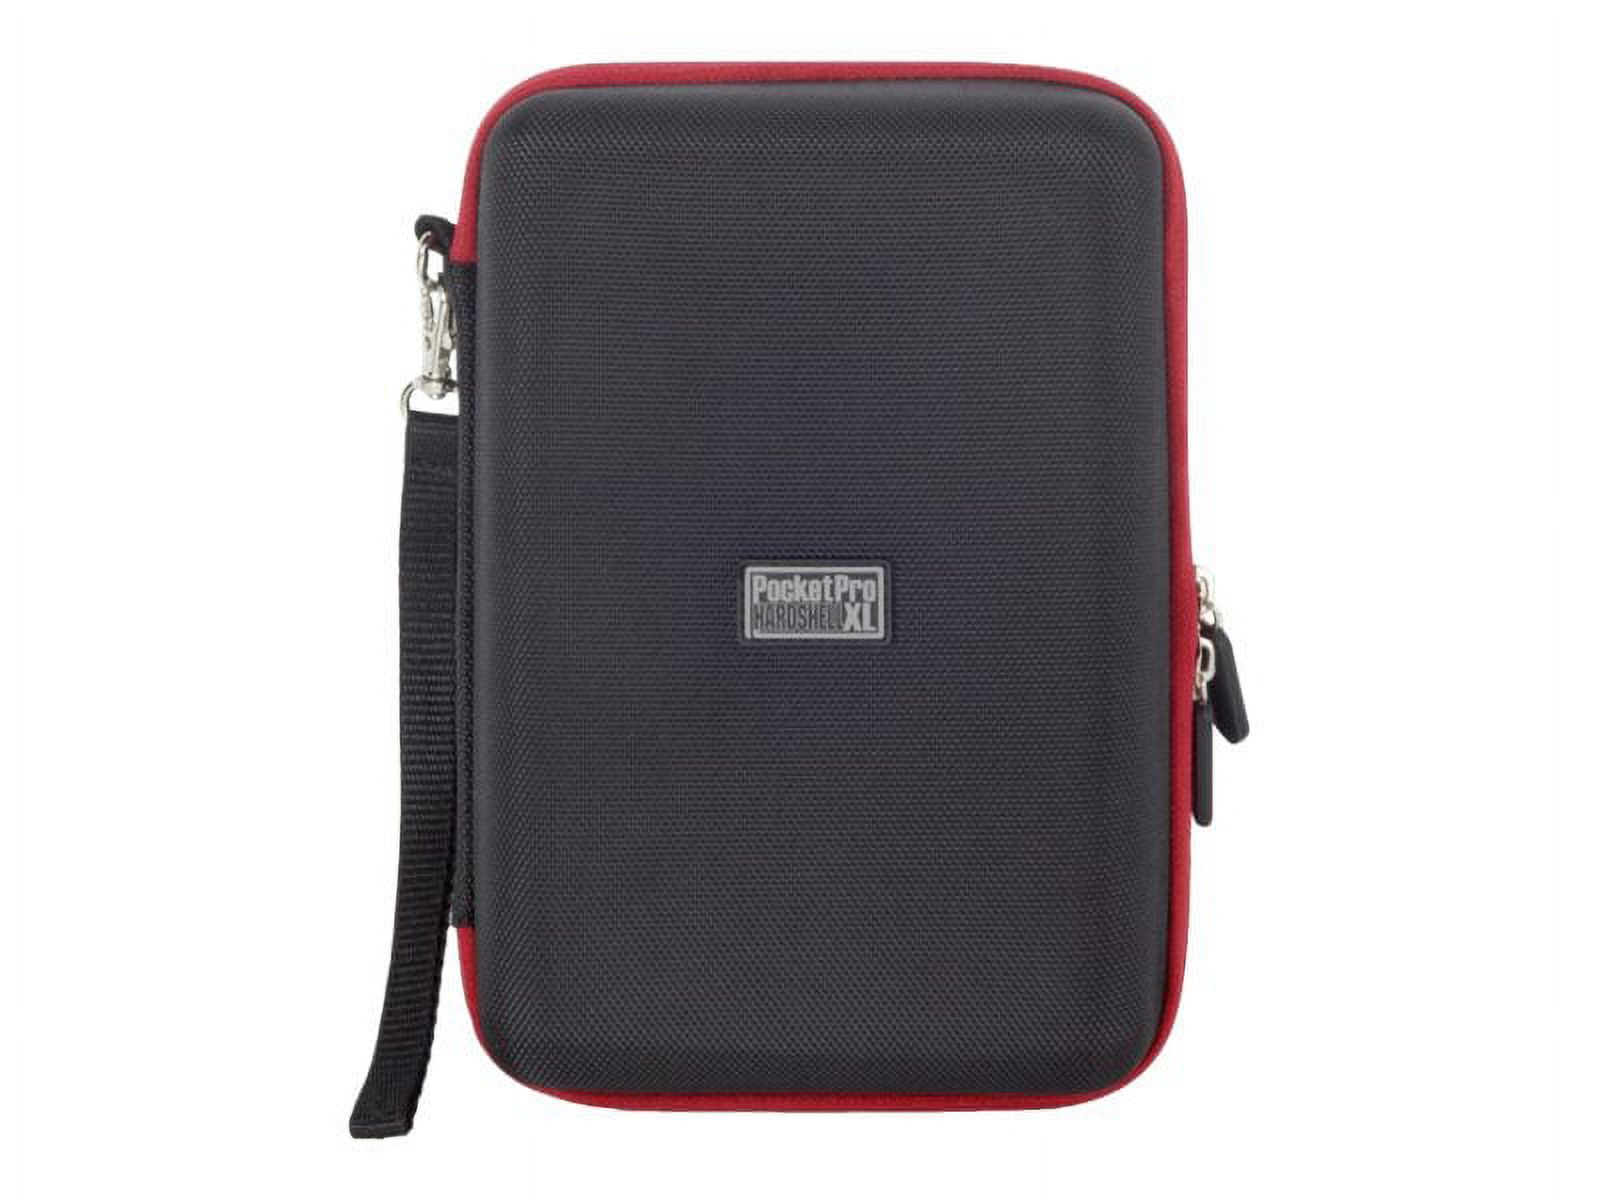 Digital Treasures PocketPro Hardshell XL - Case for tablet - EVA - black, red - for Amazon Kindle Fire HD; Apple iPad mini - image 1 of 4